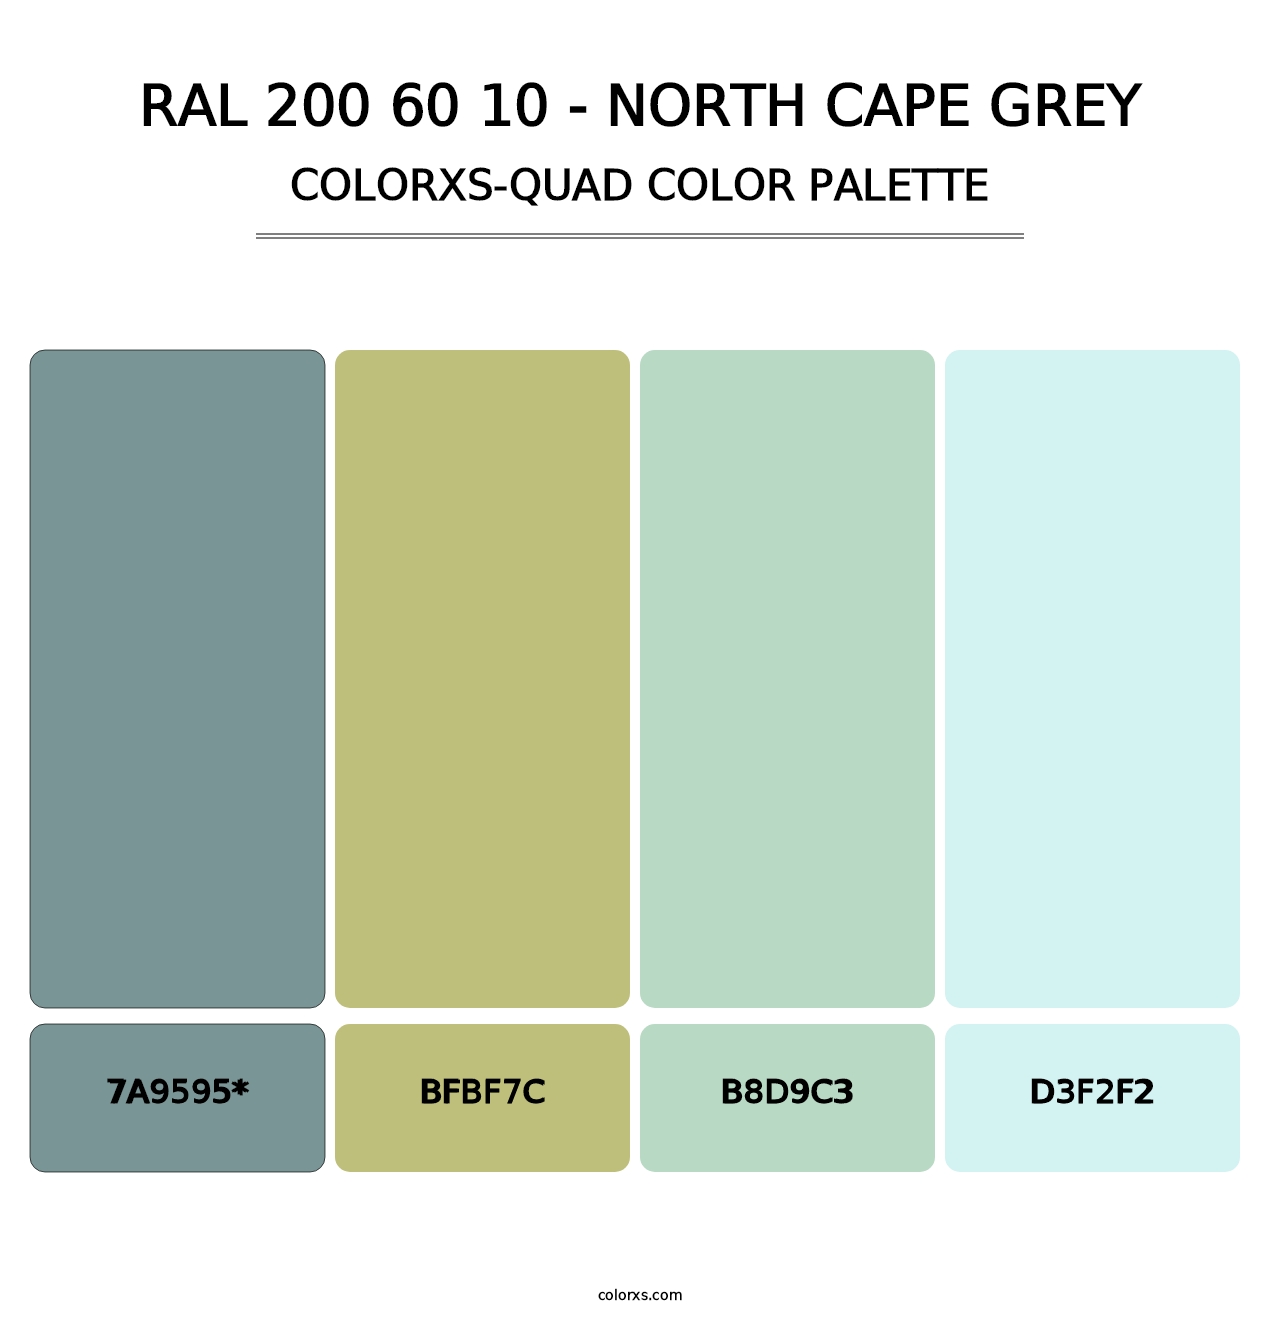 RAL 200 60 10 - North Cape Grey - Colorxs Quad Palette